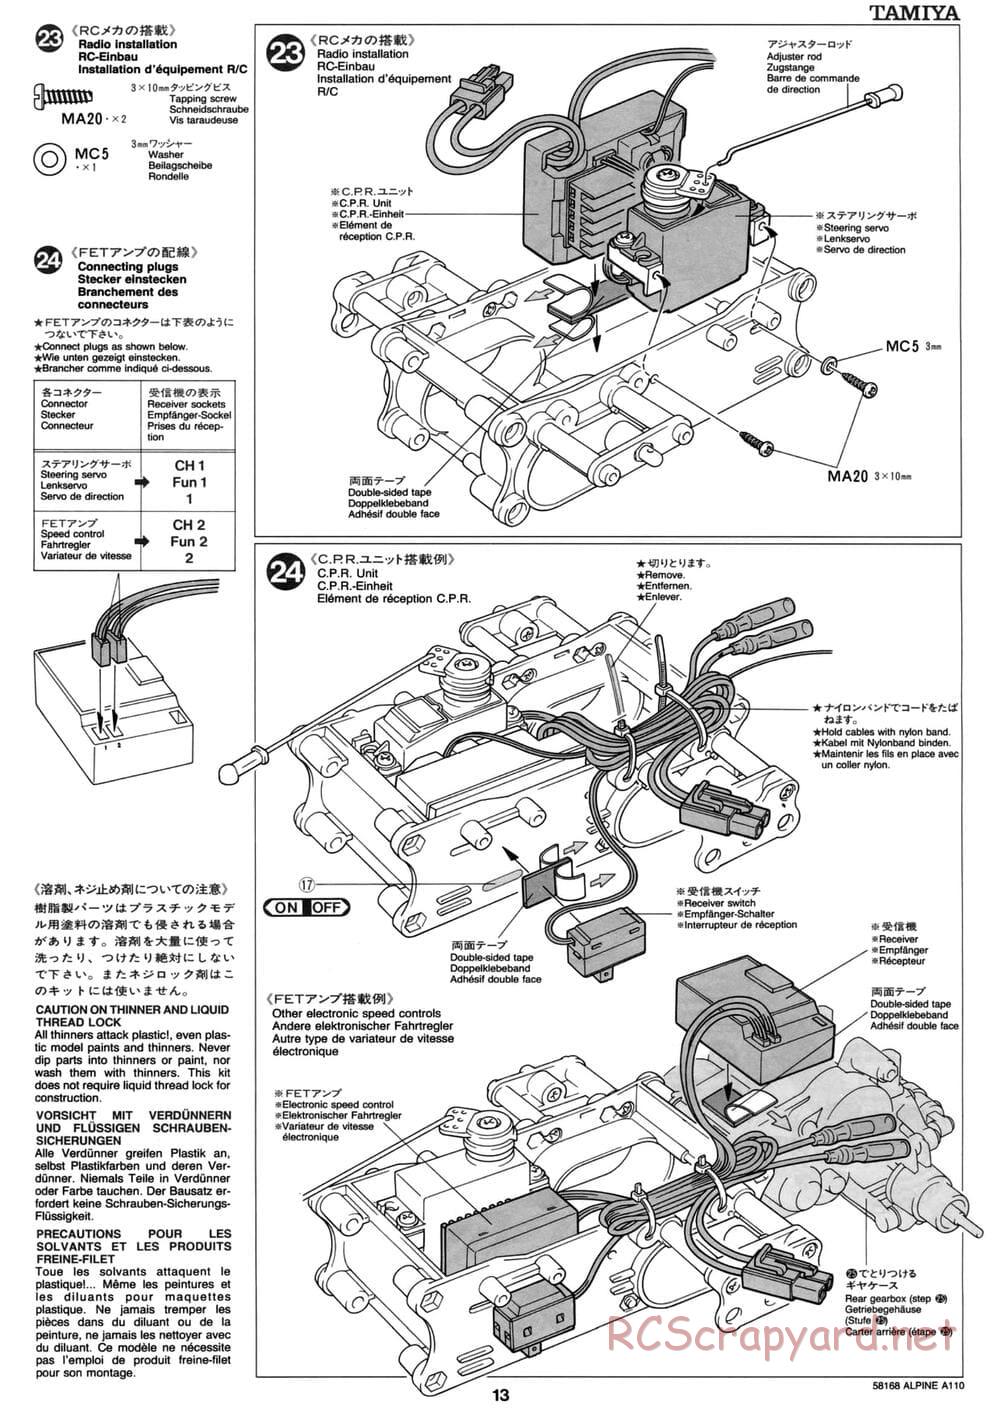 Tamiya - Alpine A110 - M02 Chassis - Manual - Page 13